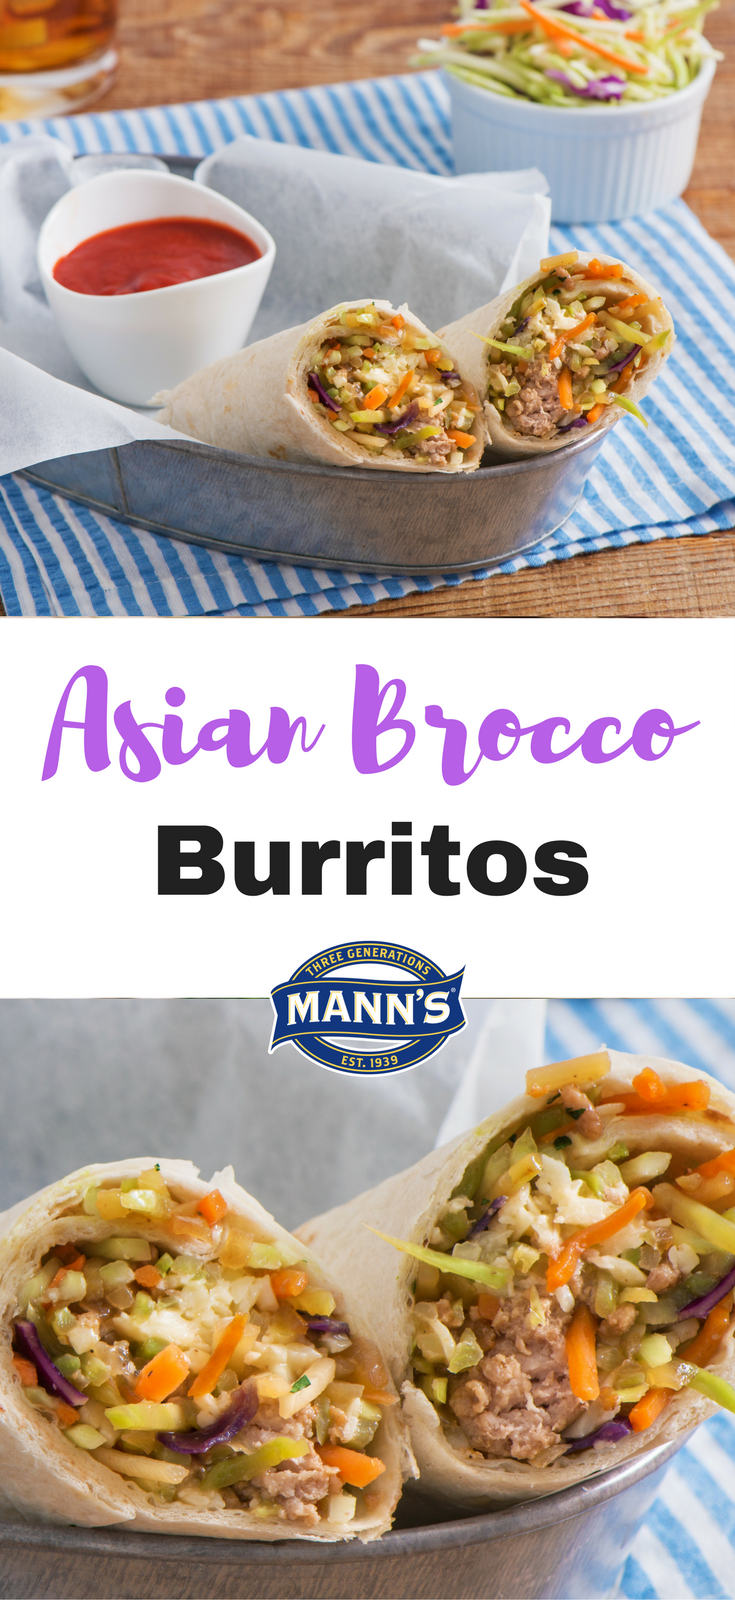 Asian Brocco Burritos | Mann's Fresh Vegetables